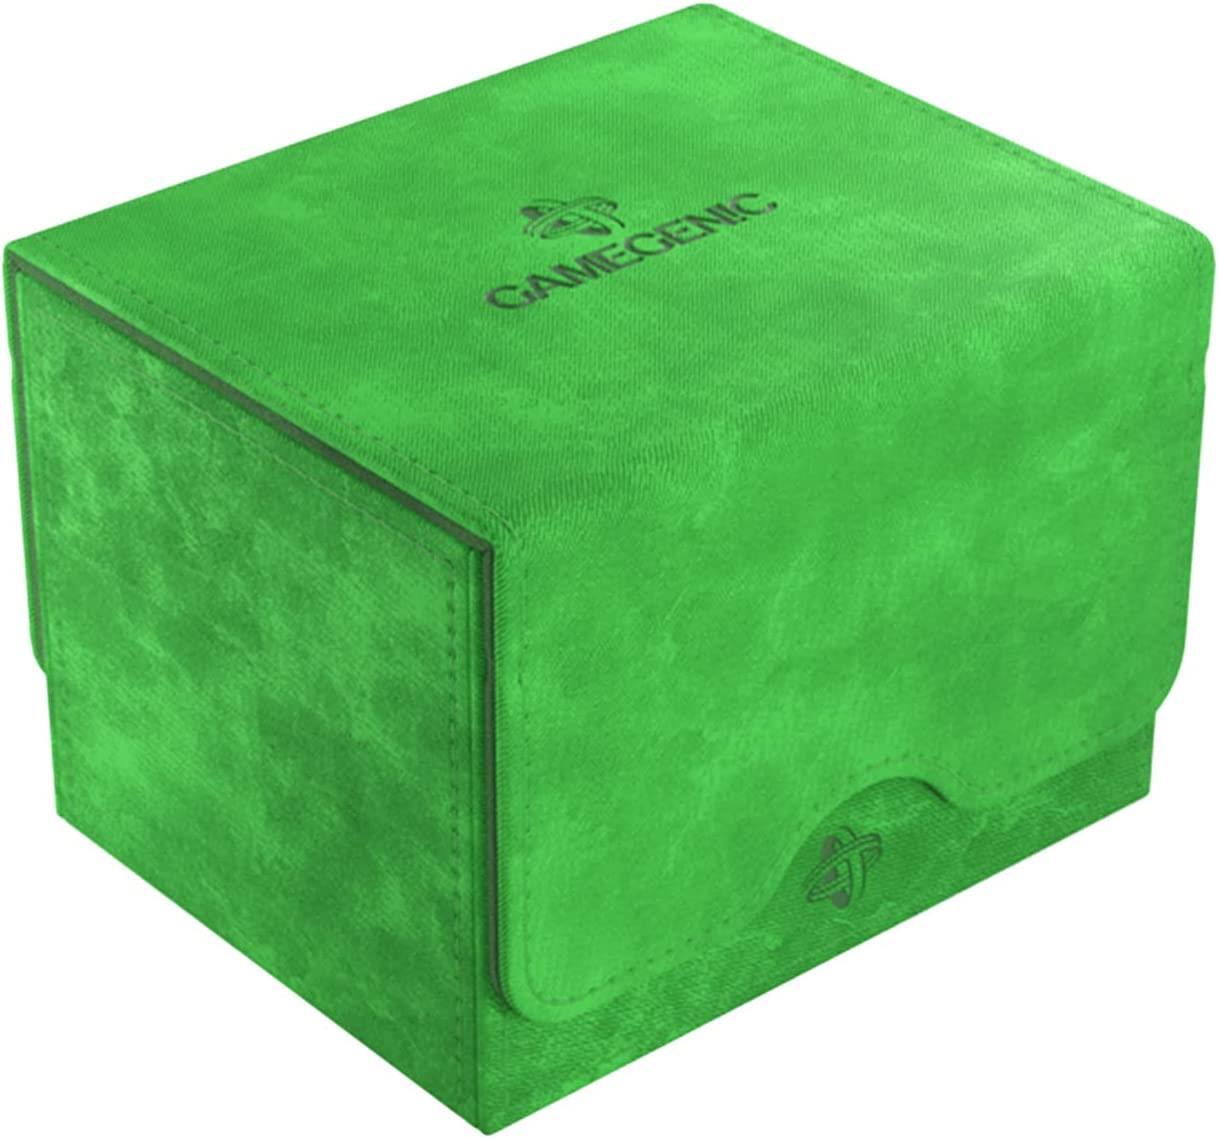 Sidekick 100+ XL - Green   TCG Gamegenic